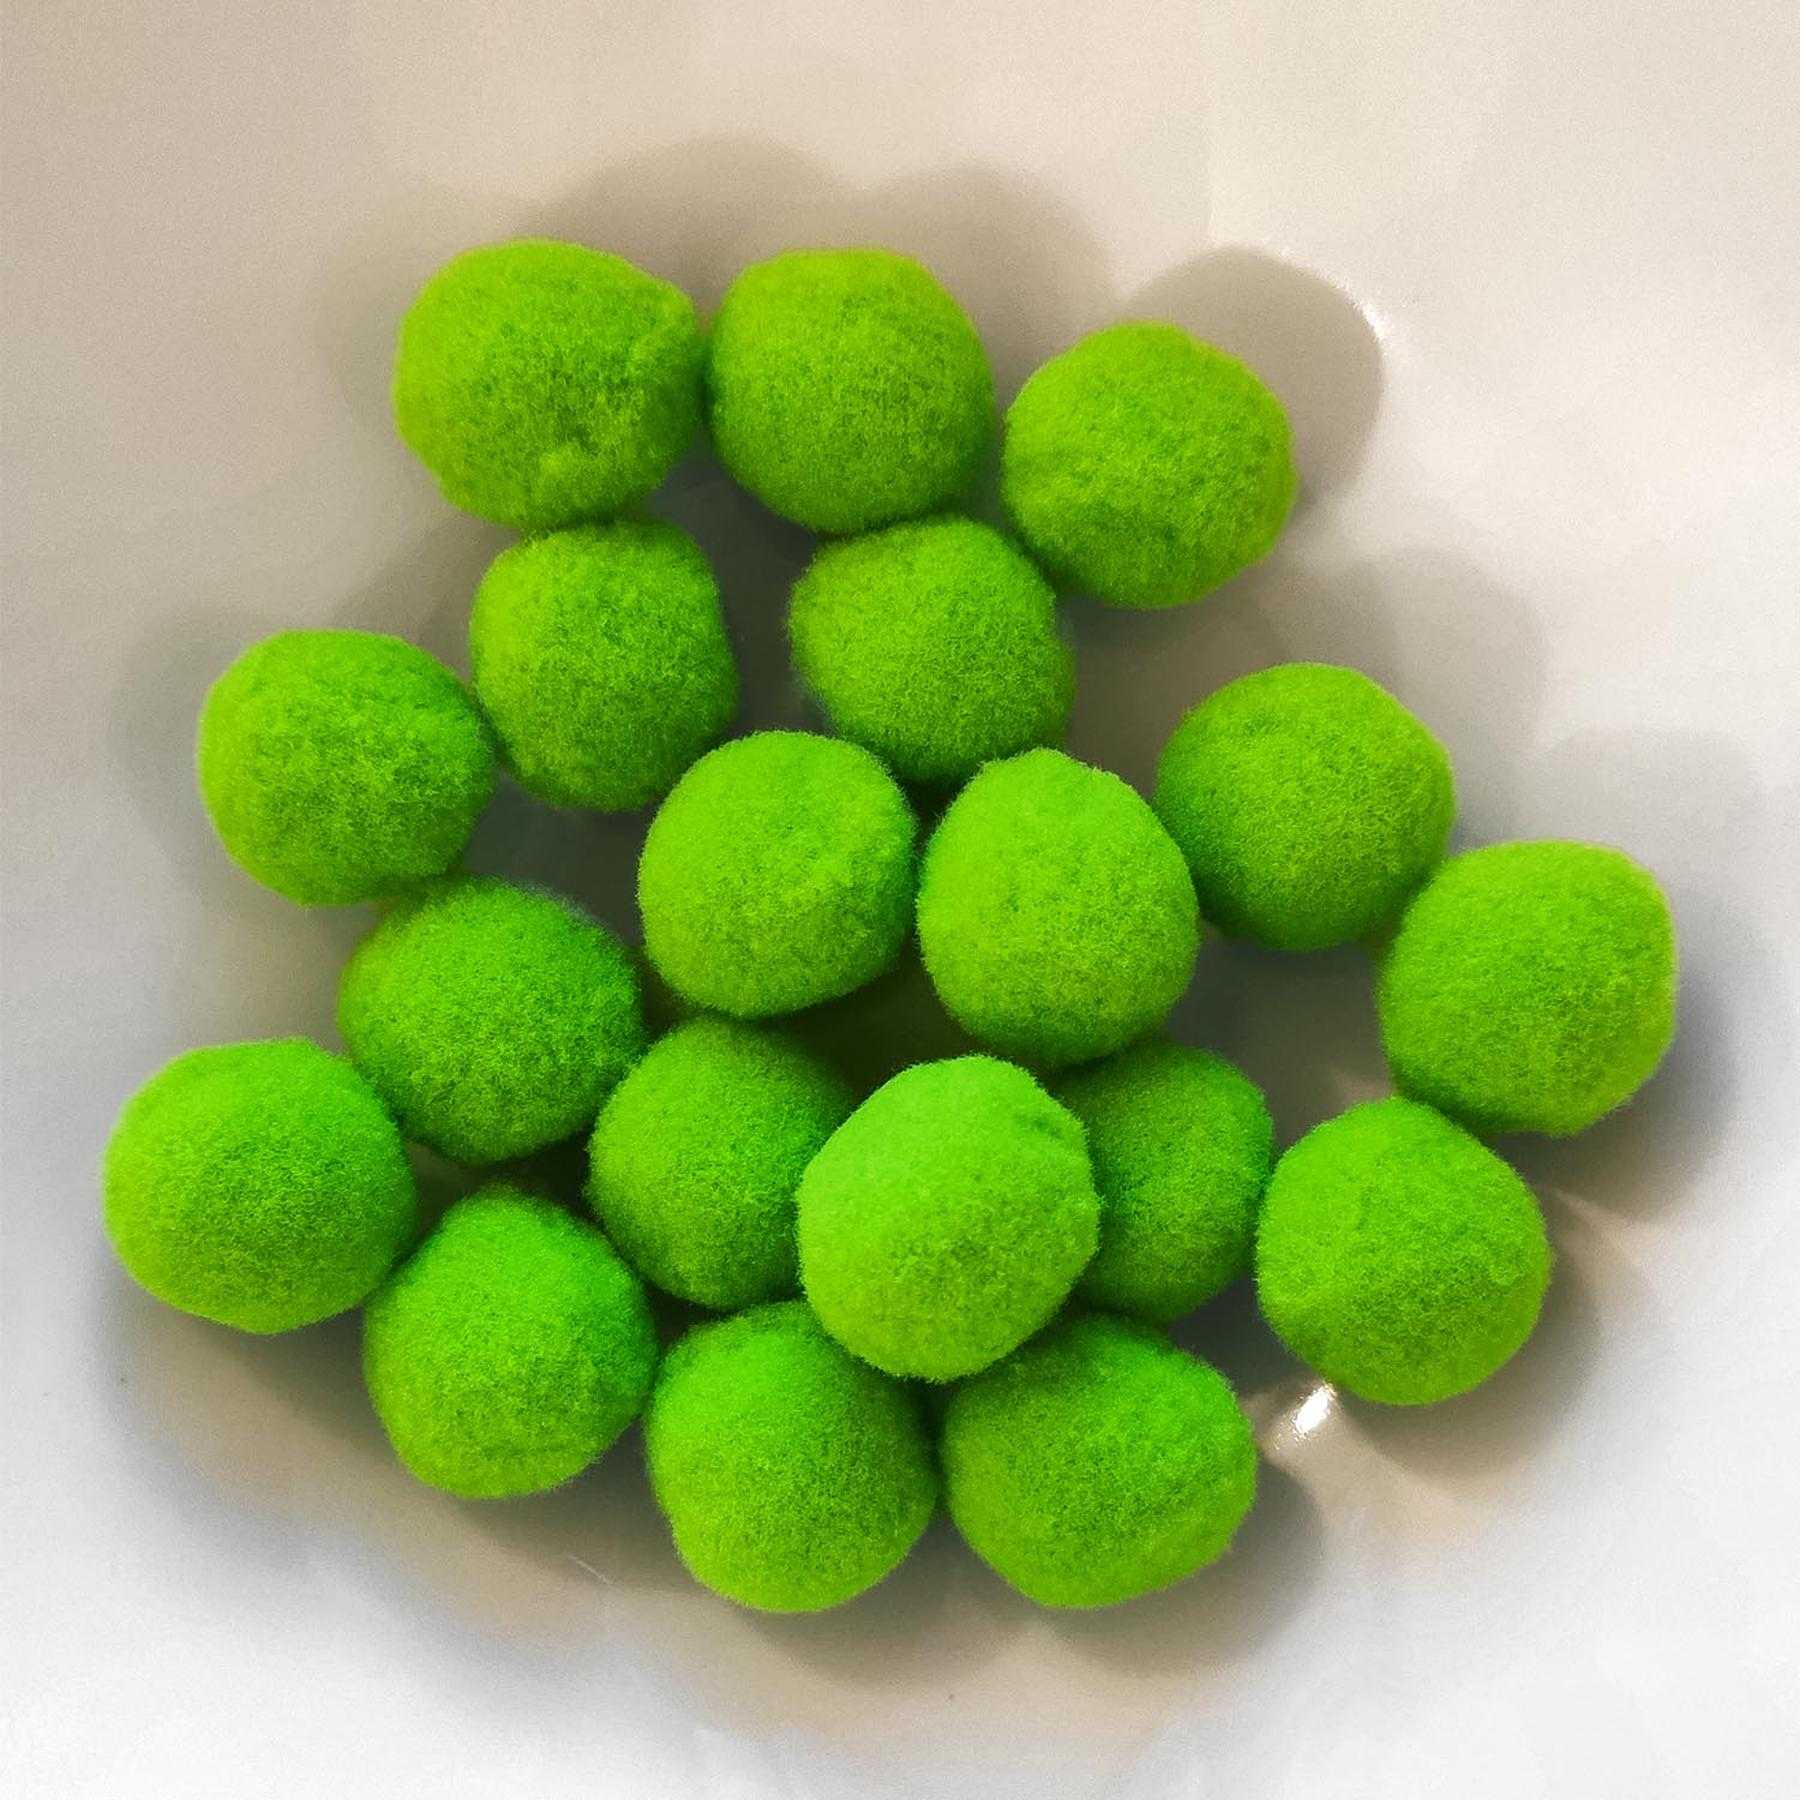 PomPon / Bälle aus Baumwolle - 20 mm / 25er Set - Grün hell